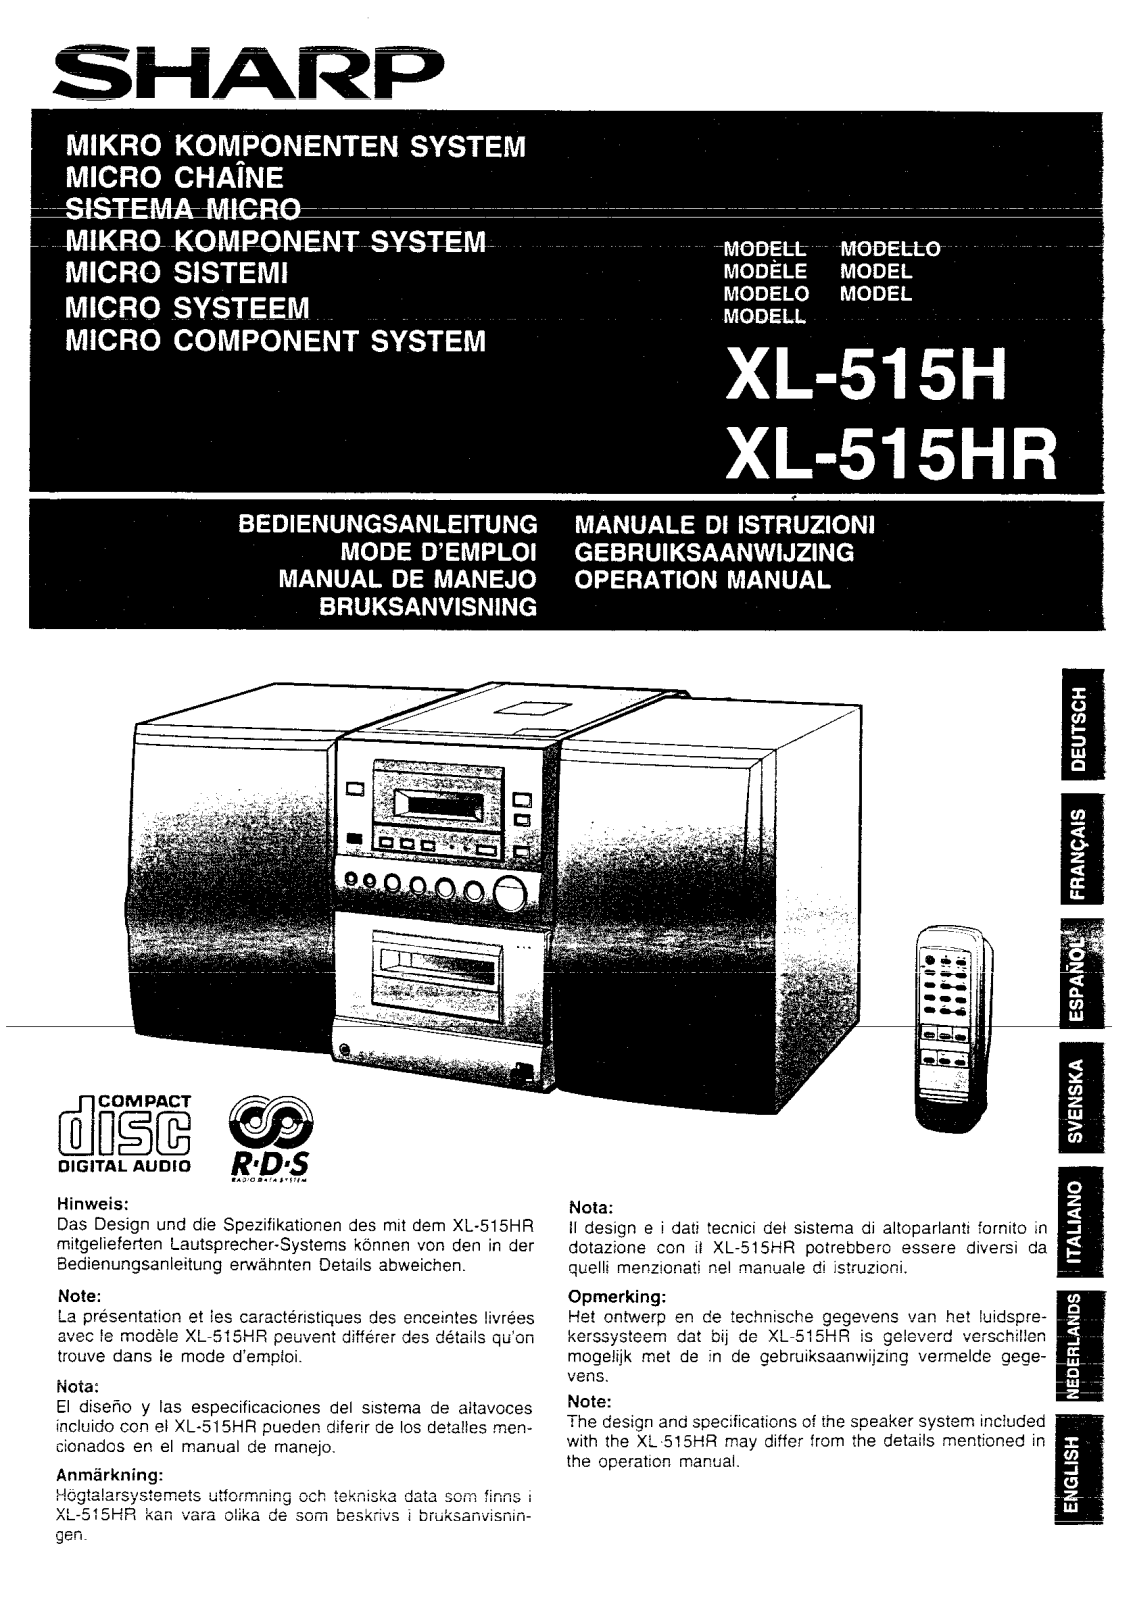 Sharp XL-515H, XL-515HR Manual